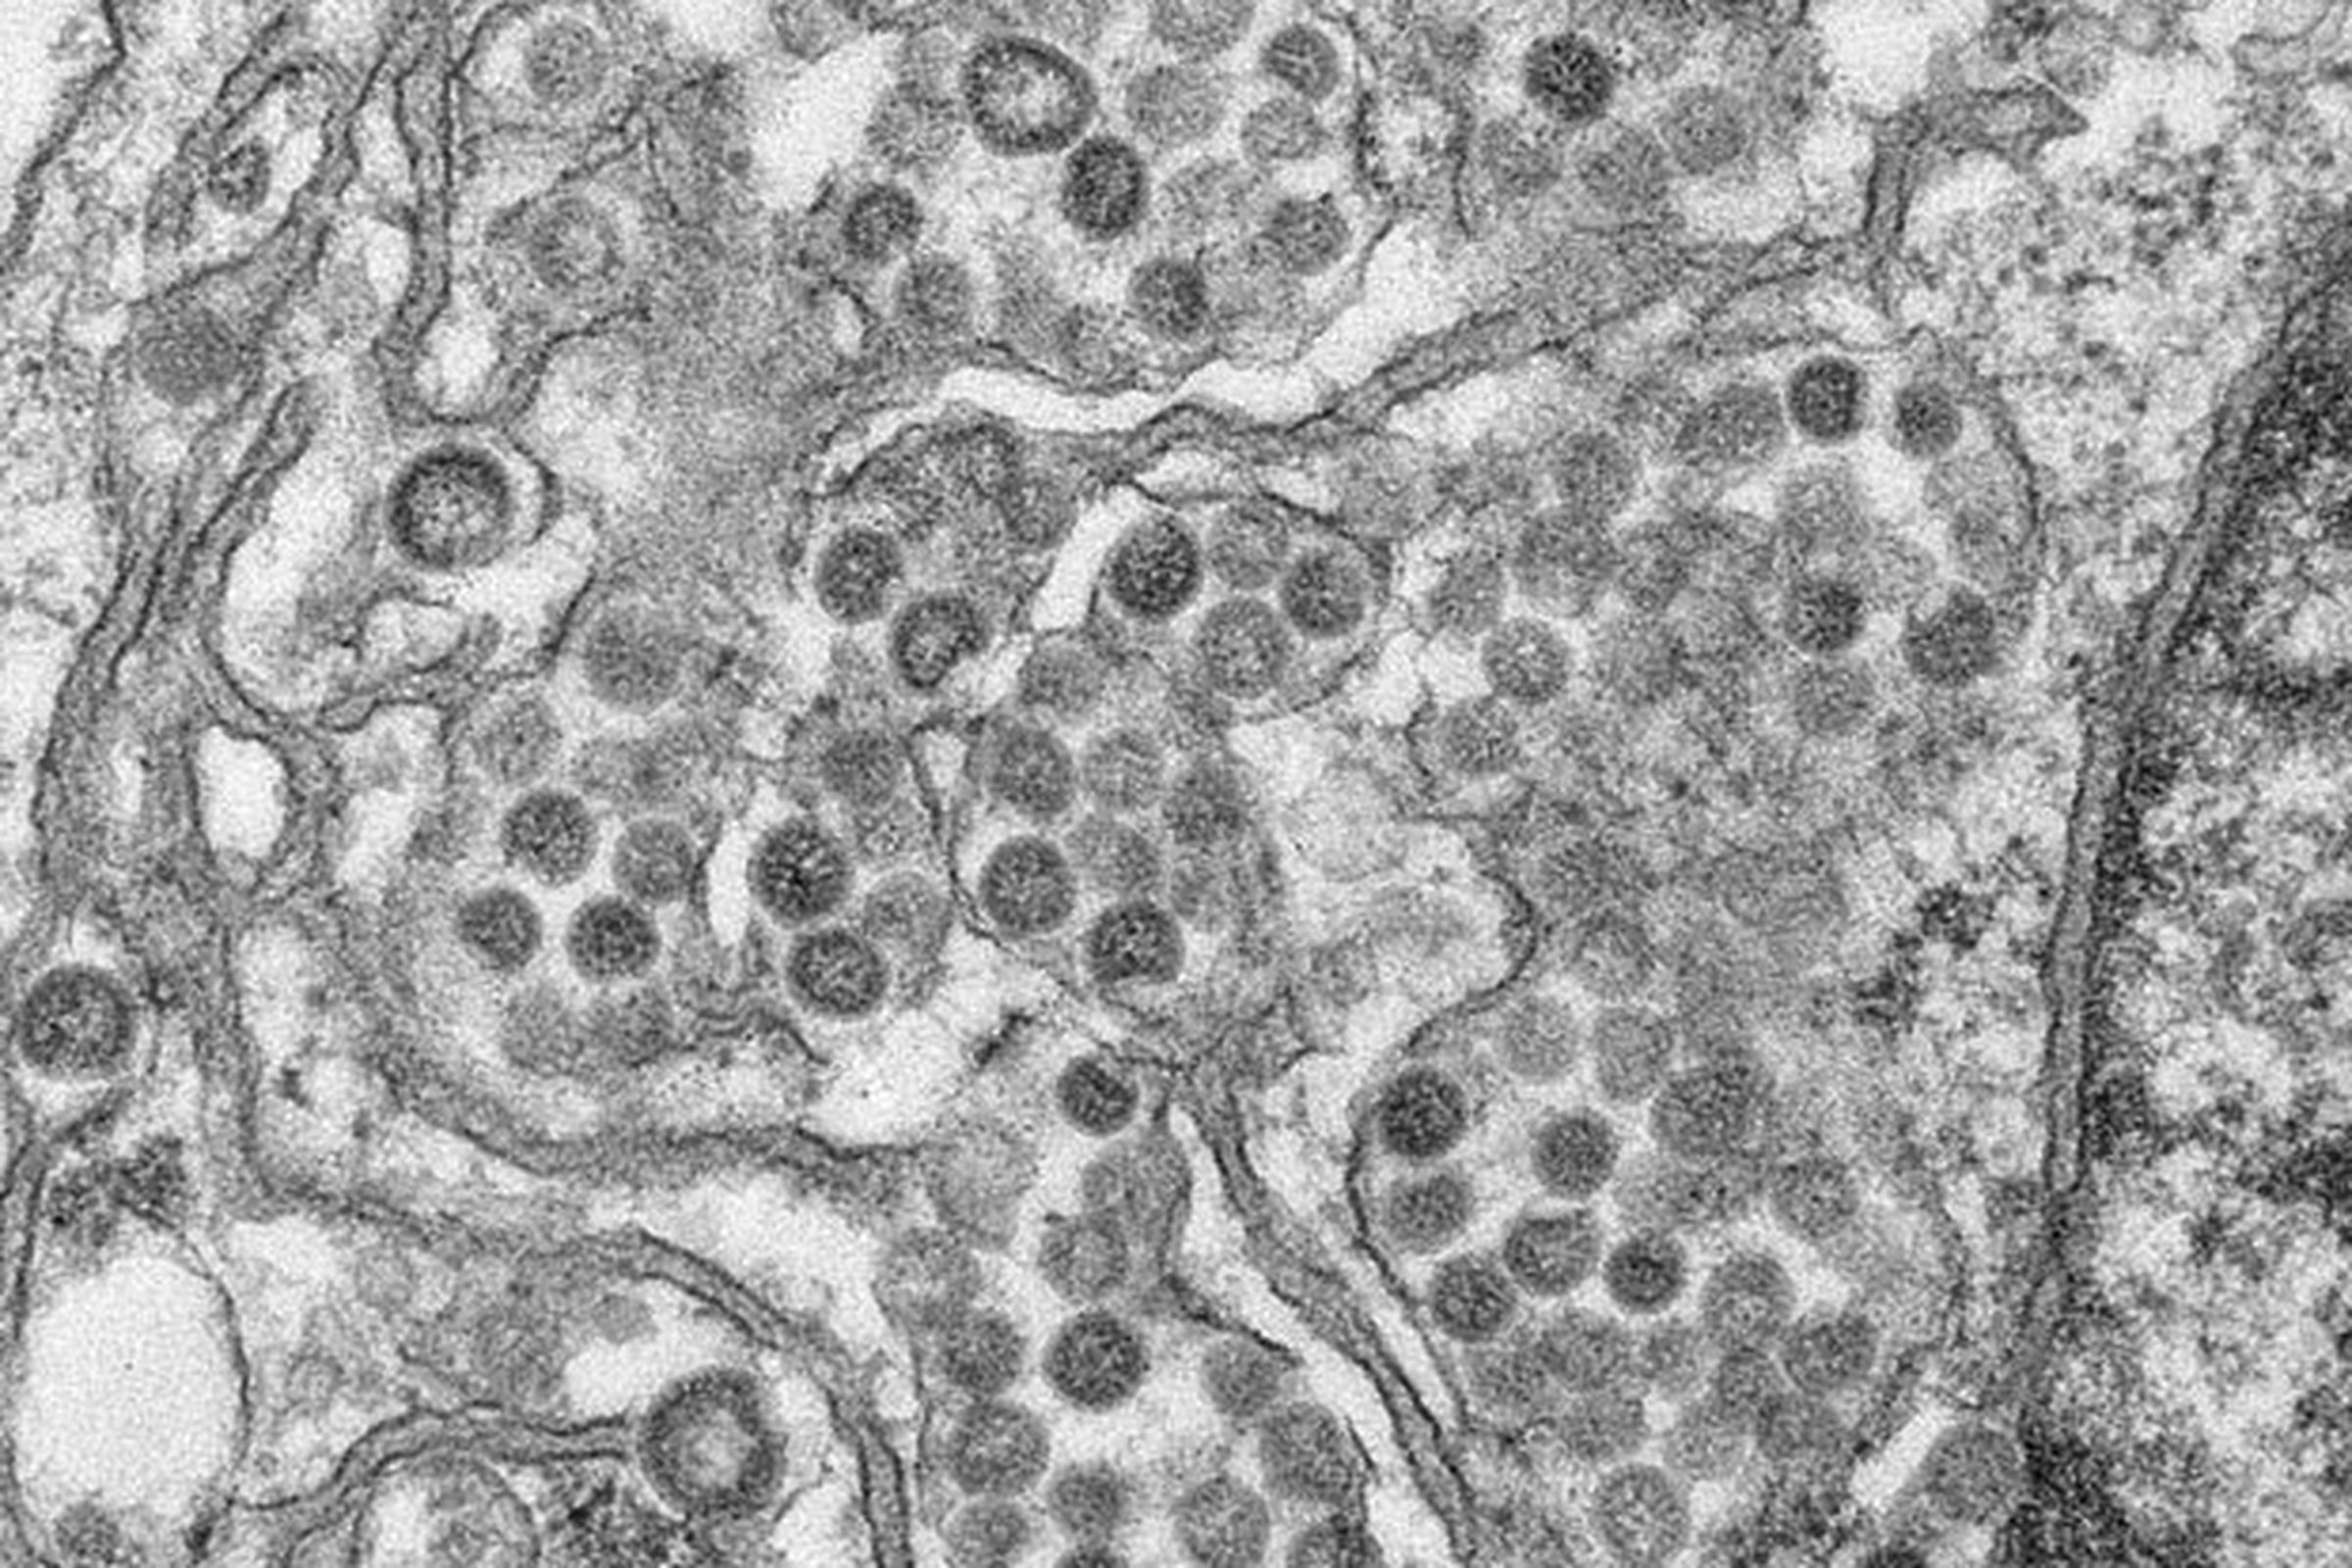 MERS virus (Credit: CDC)